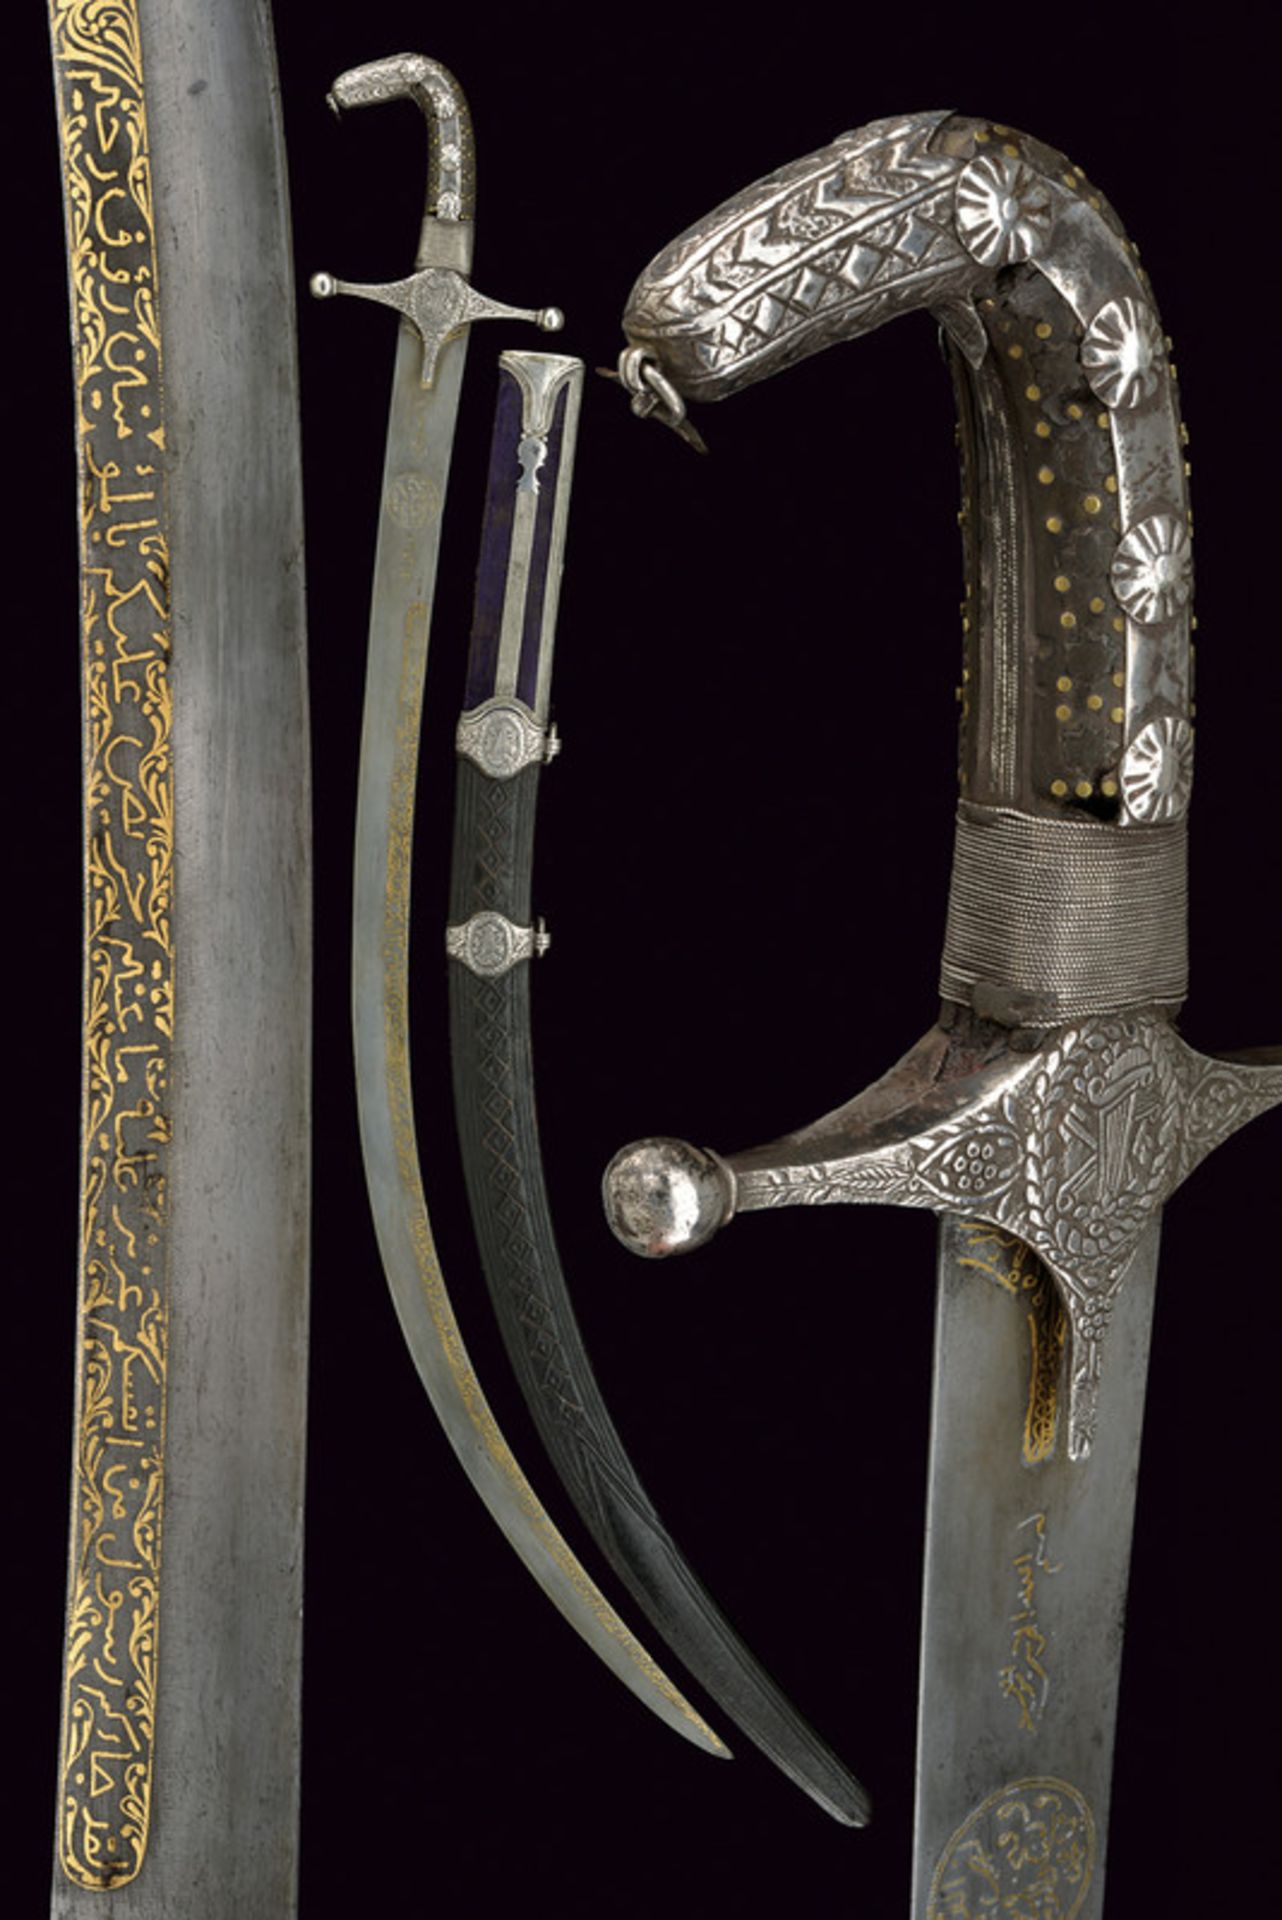 A beautiful shamshir (sword)